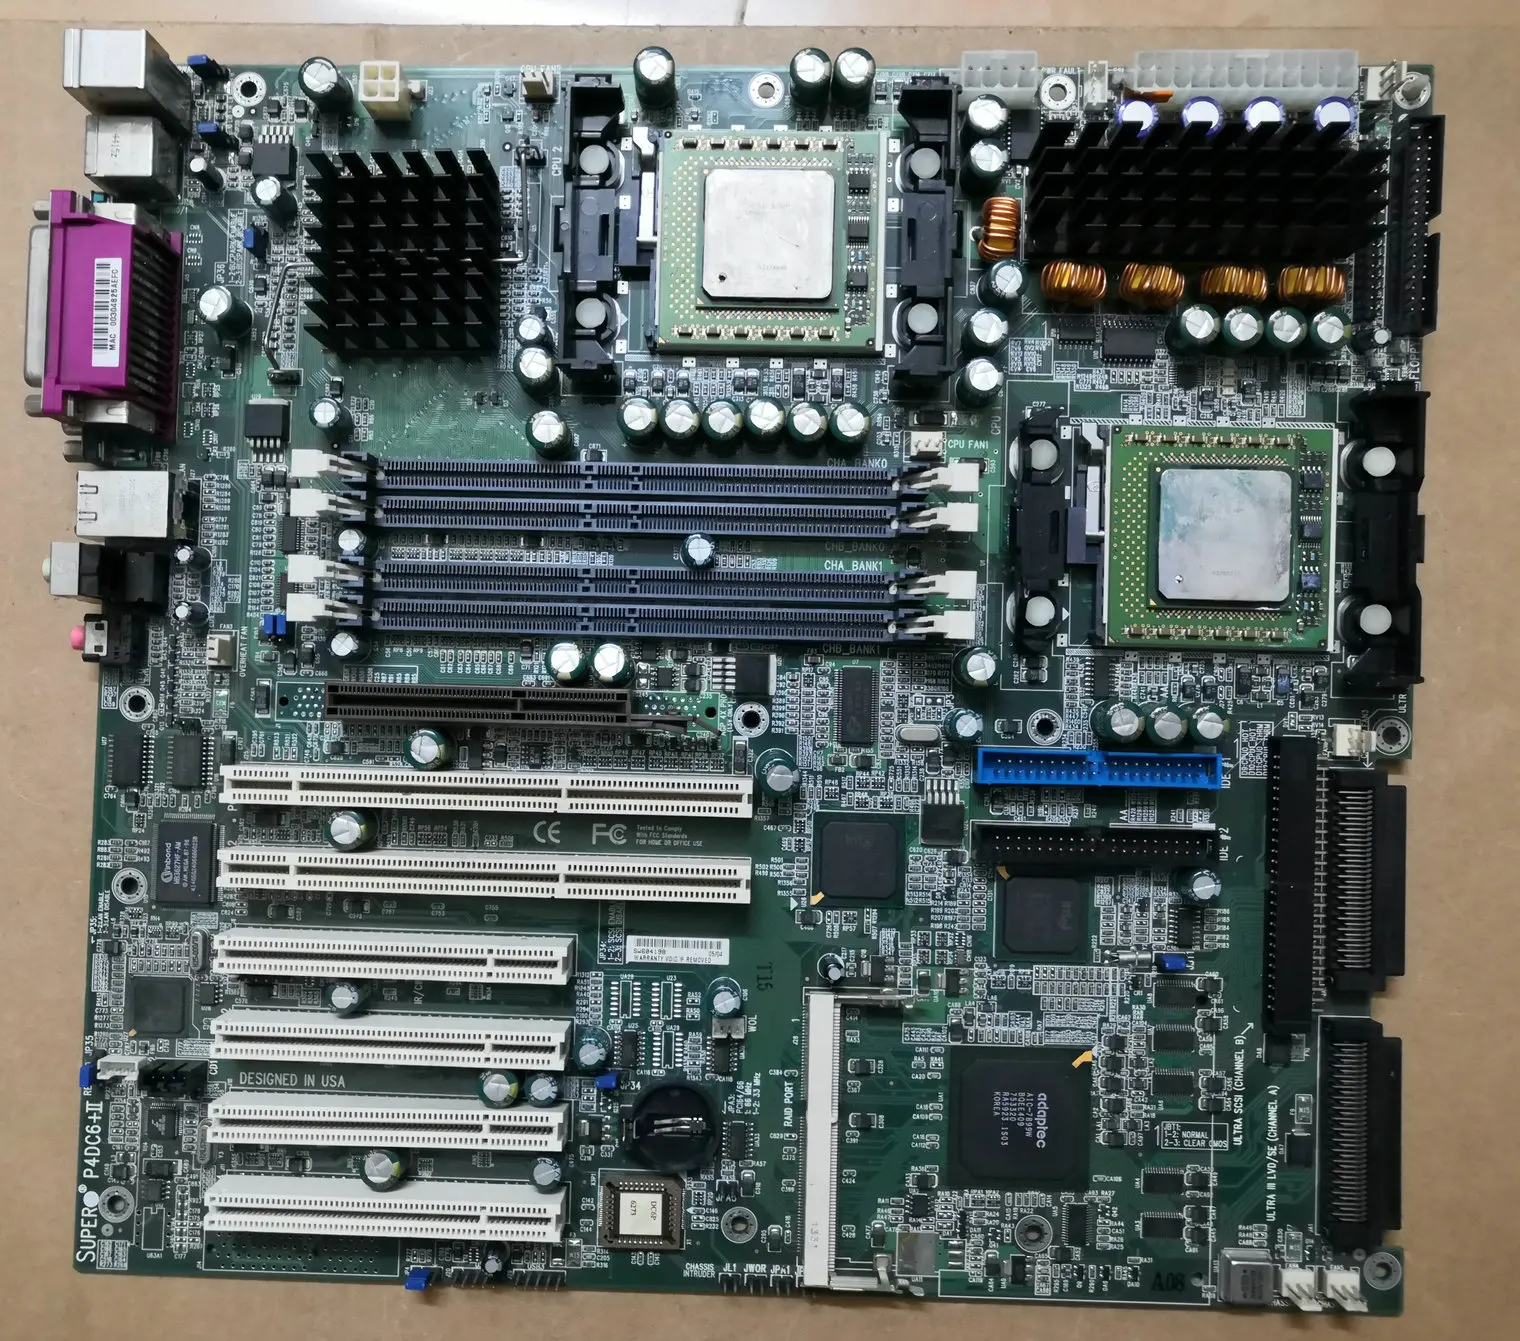 

P4DC6+II Xeon 603 workstation server motherboard with SCSI RAID